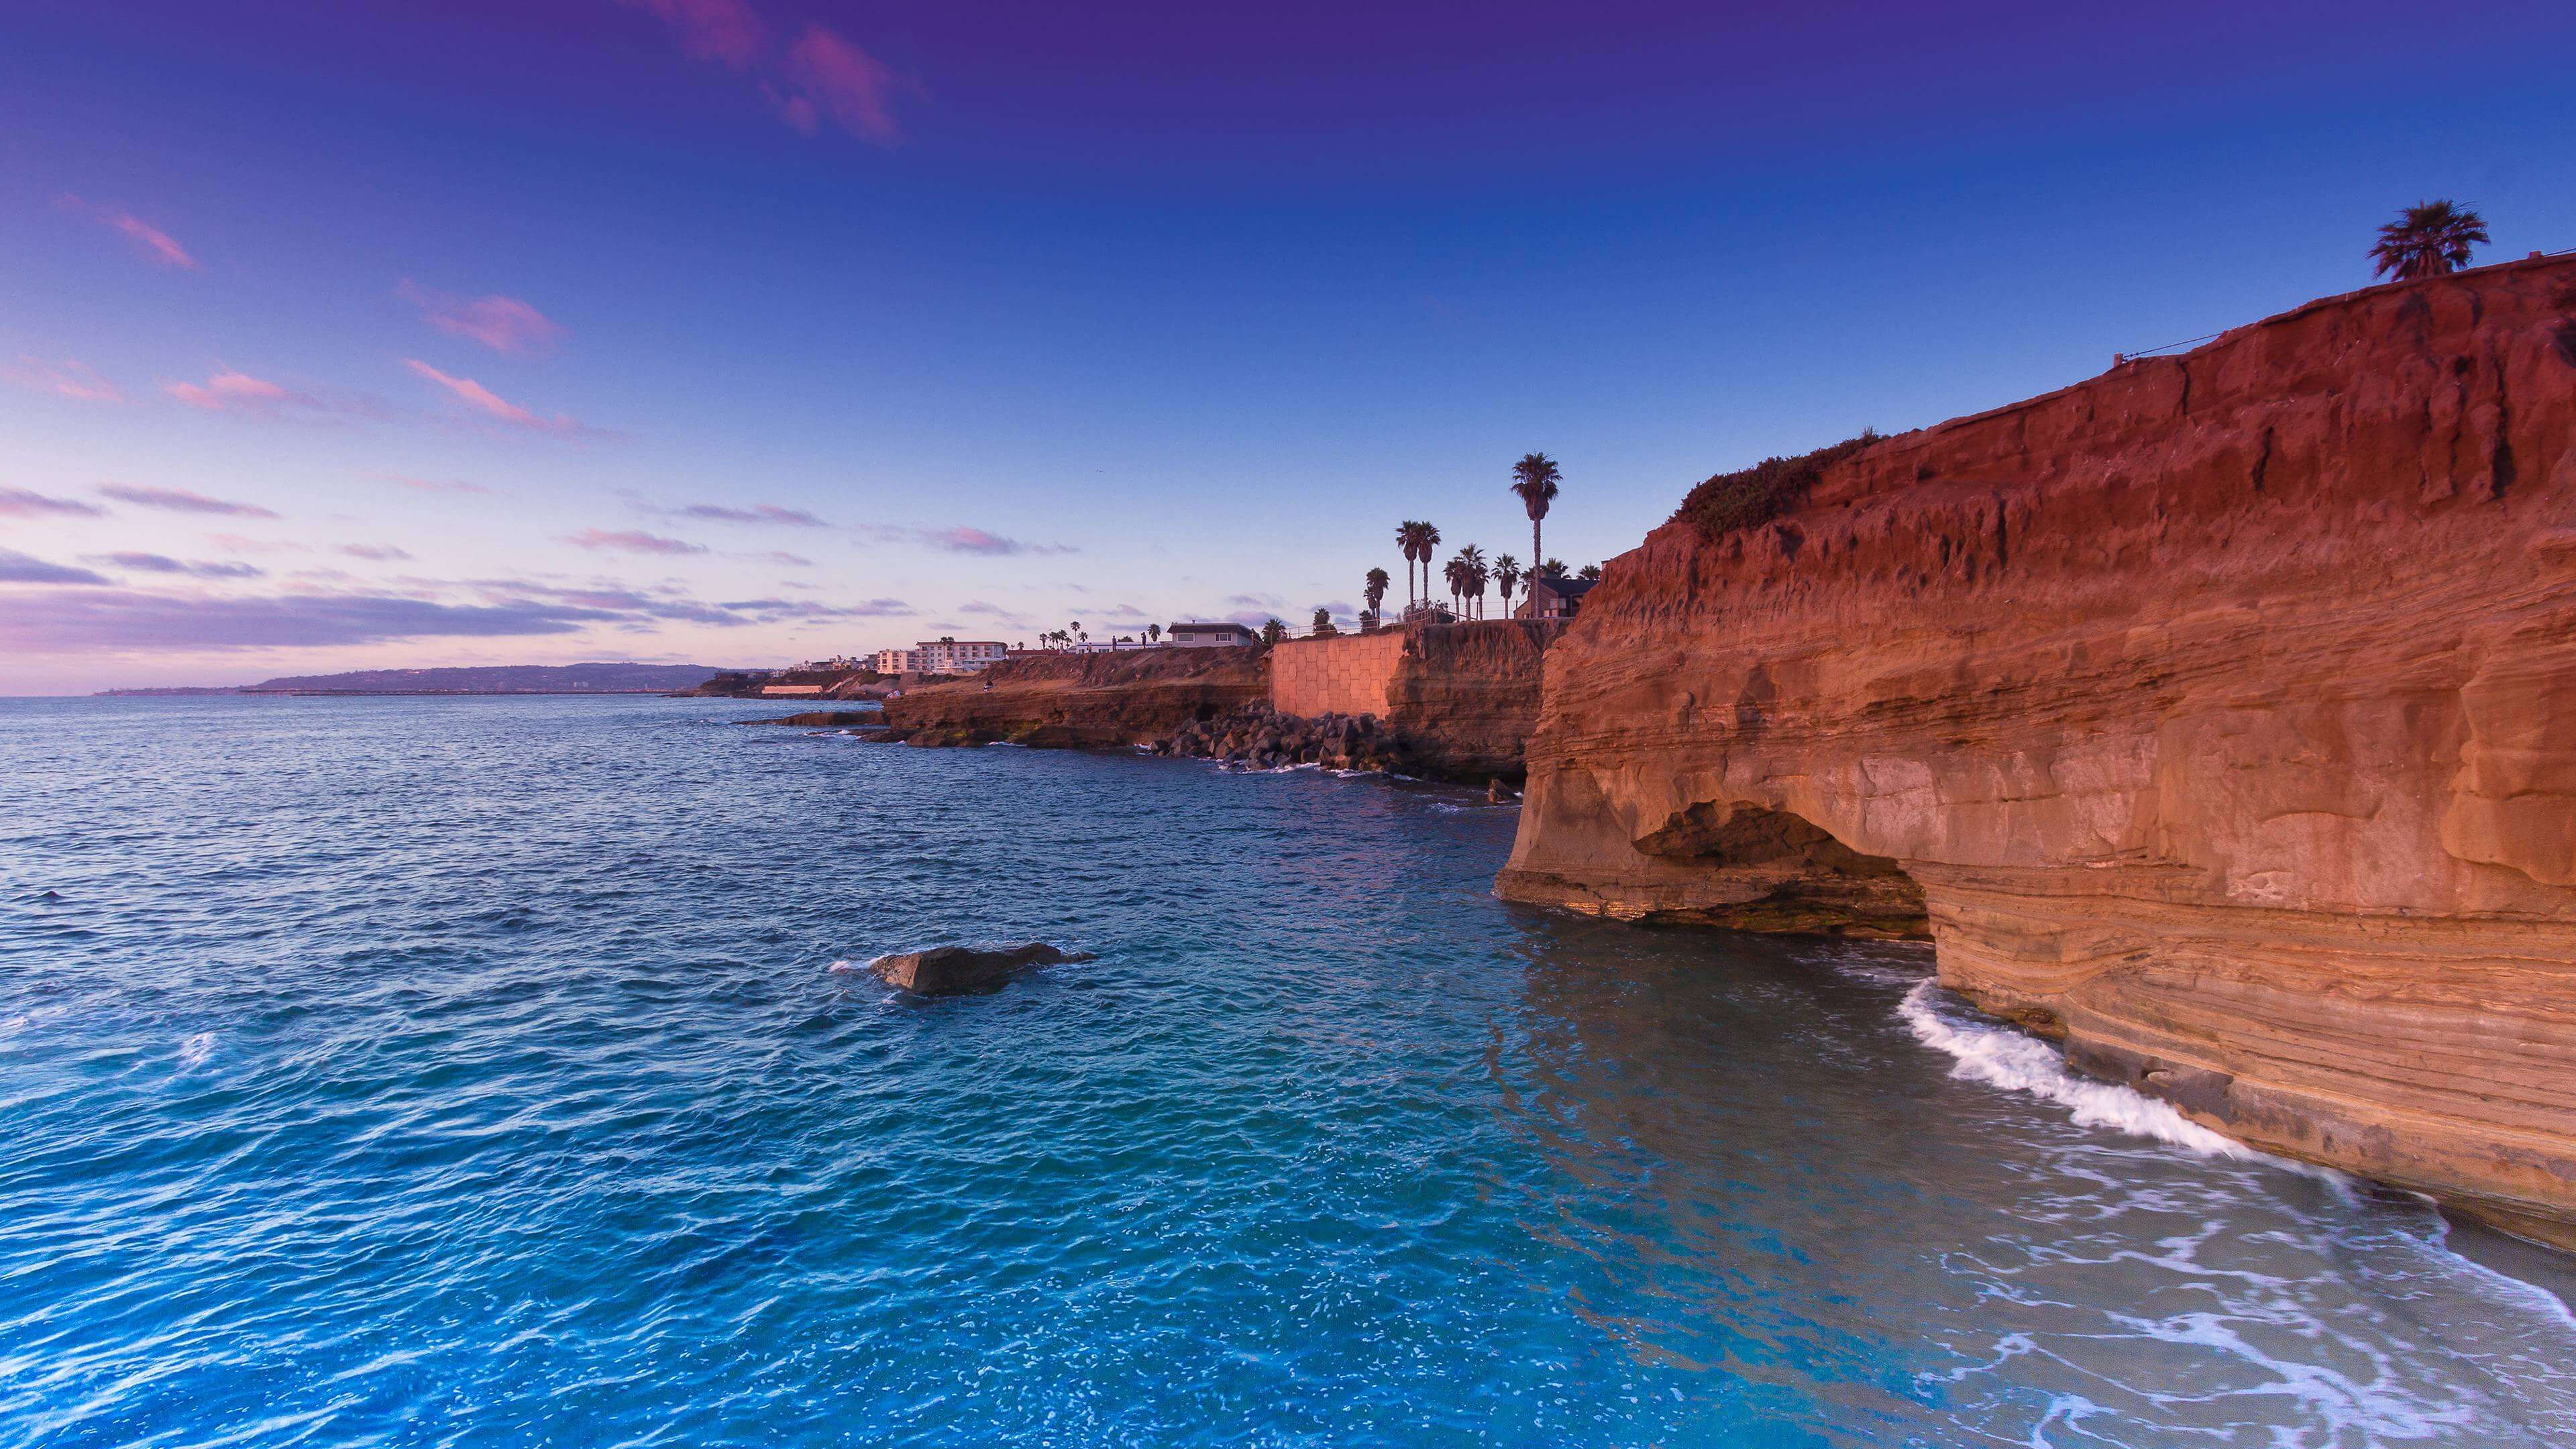 4K Ultra HD Beach Desktop Wallpaper 3084 x 2160. Sunset cliffs san diego, San diego, San